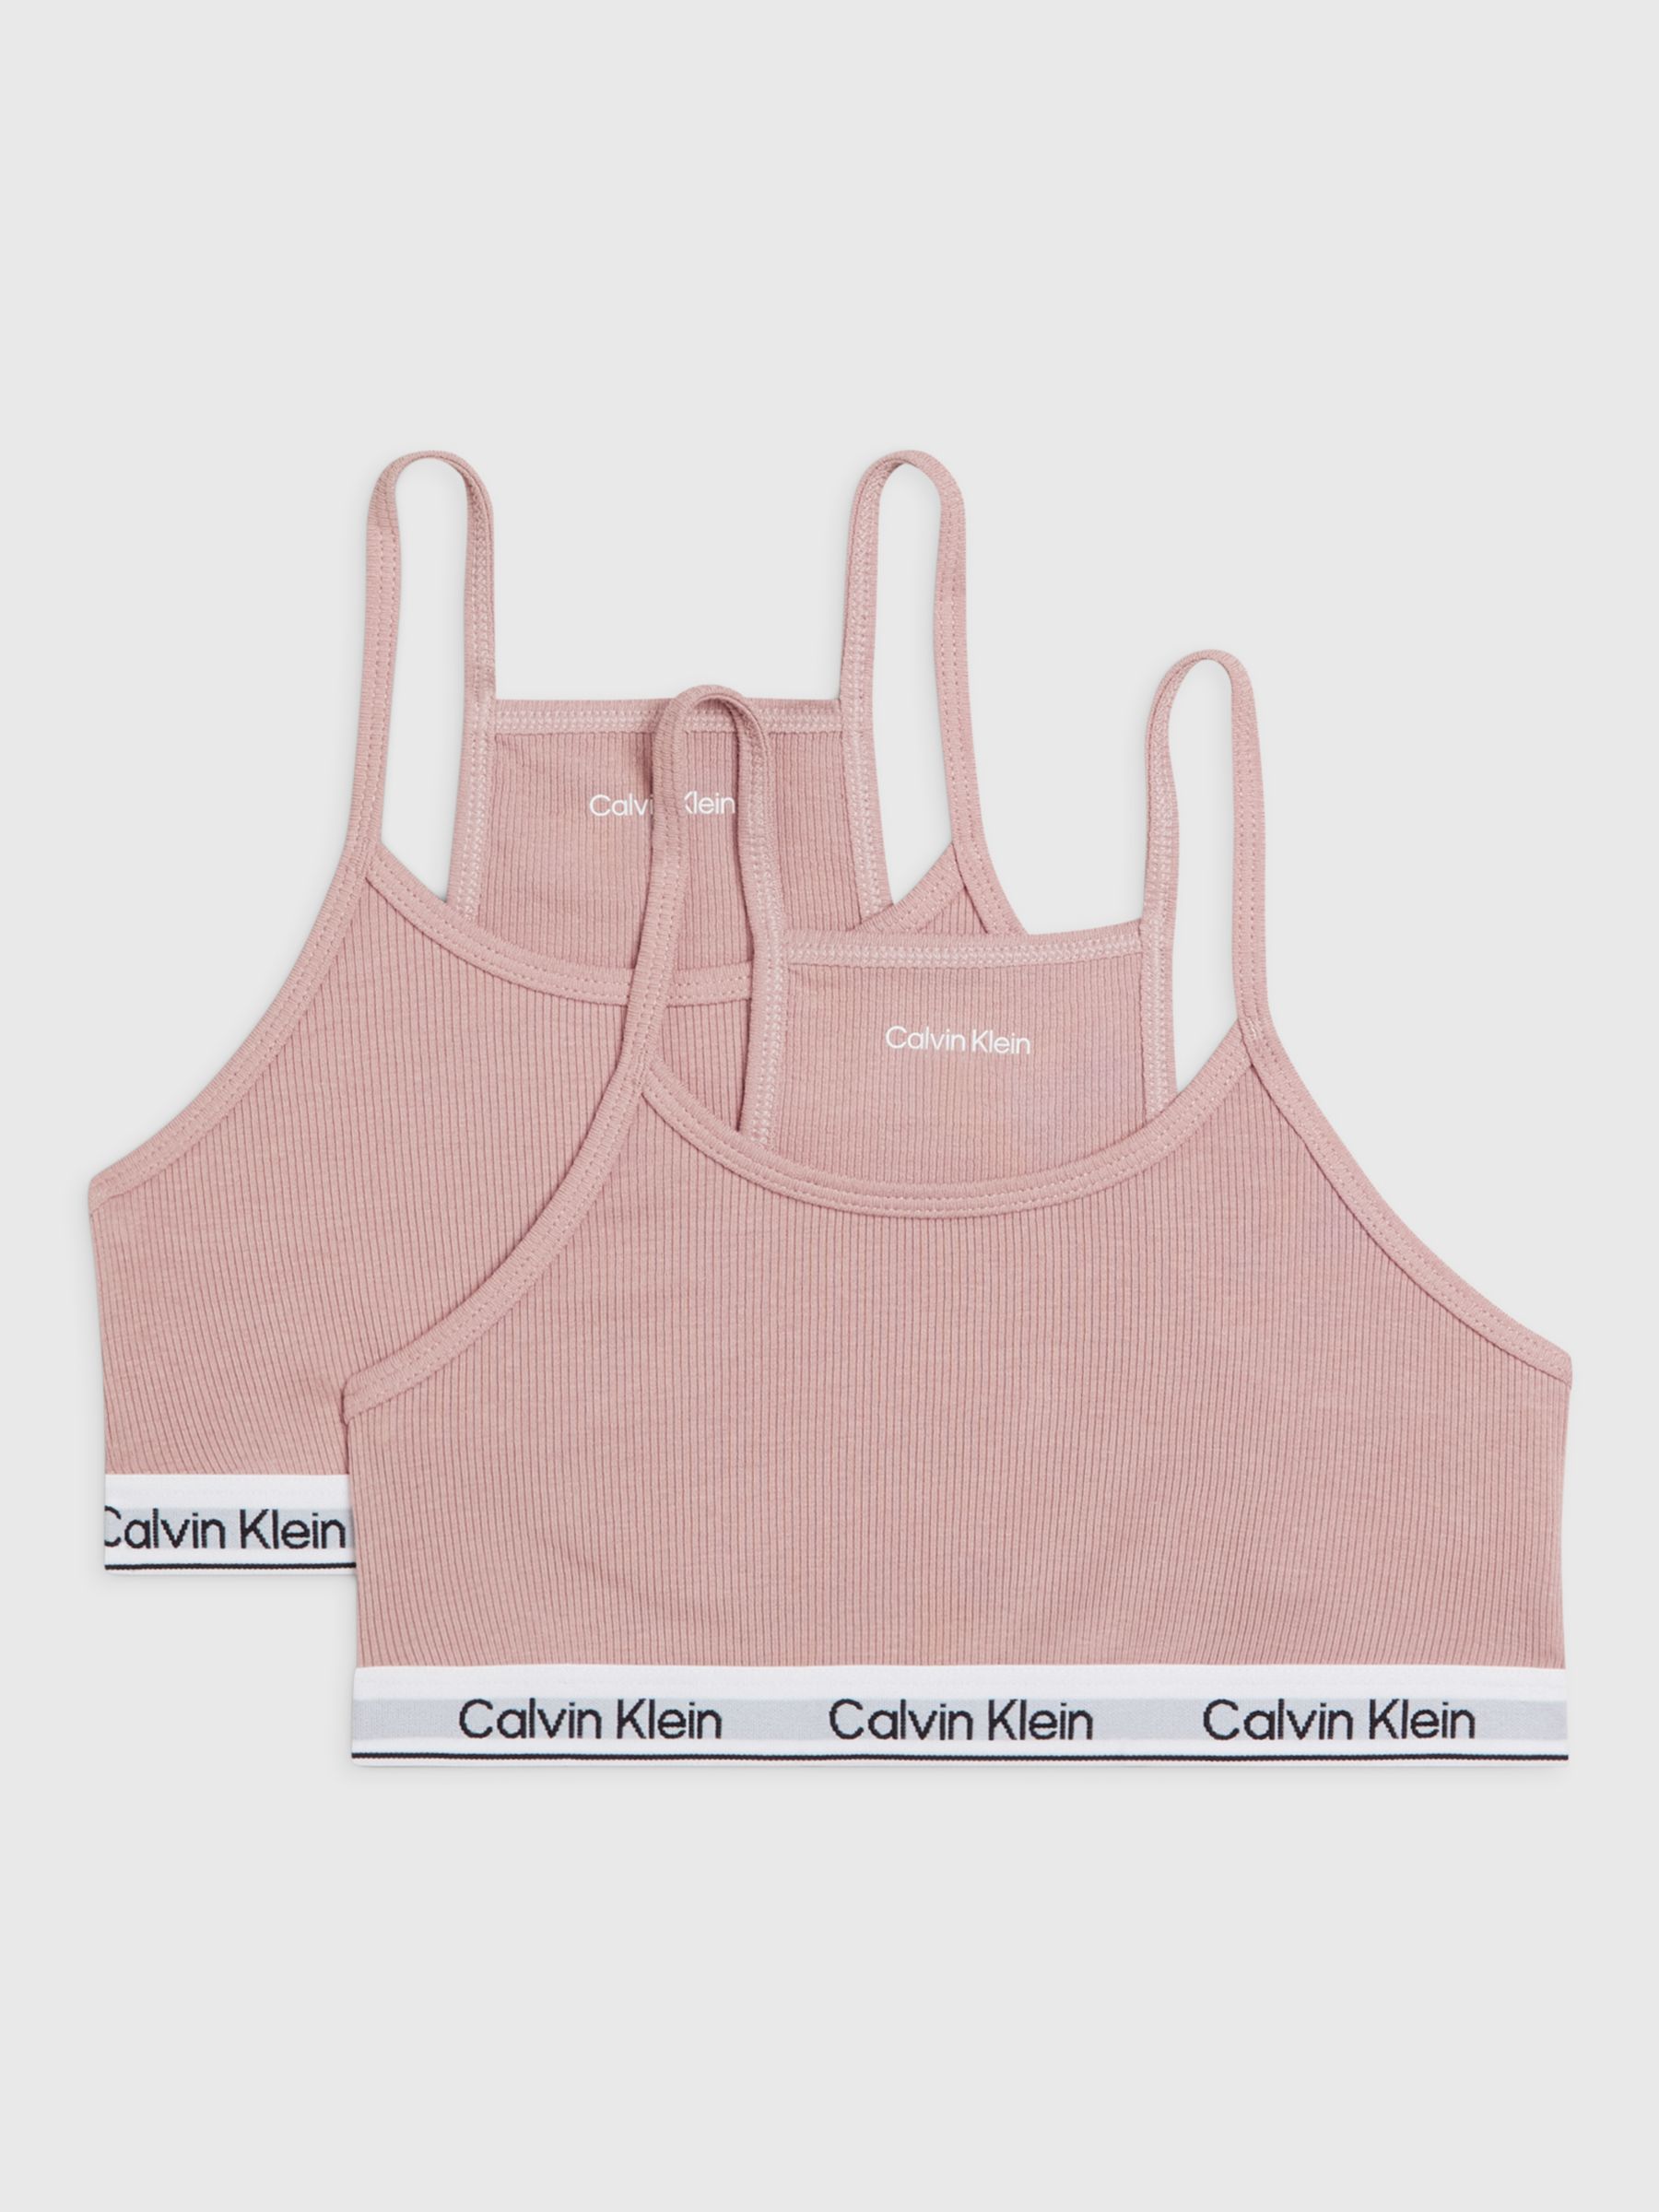 Calvin Klein Kids' Racer Back Bralette, Pink, 10 years